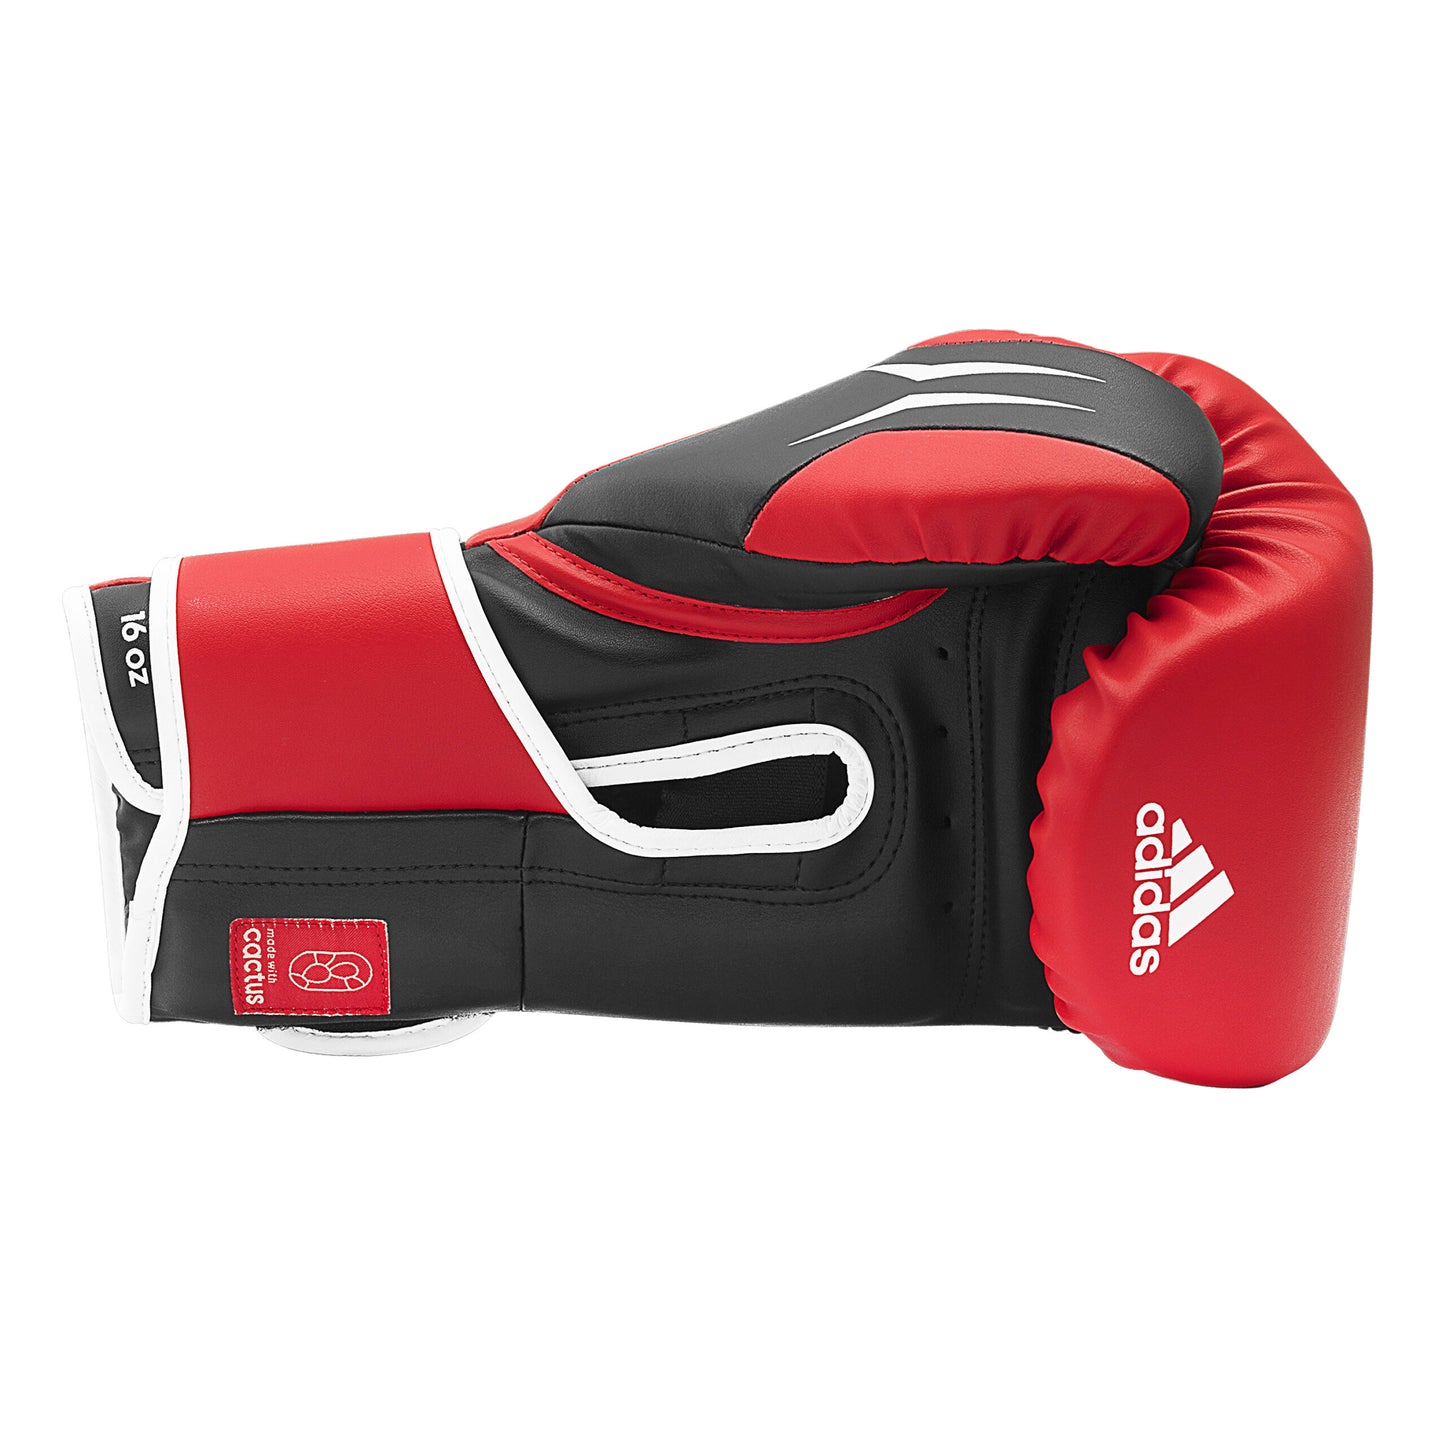 Adispd350tg Adidas Tilt 350 Pro Training Boxing Glove Strap Active Red Black 03